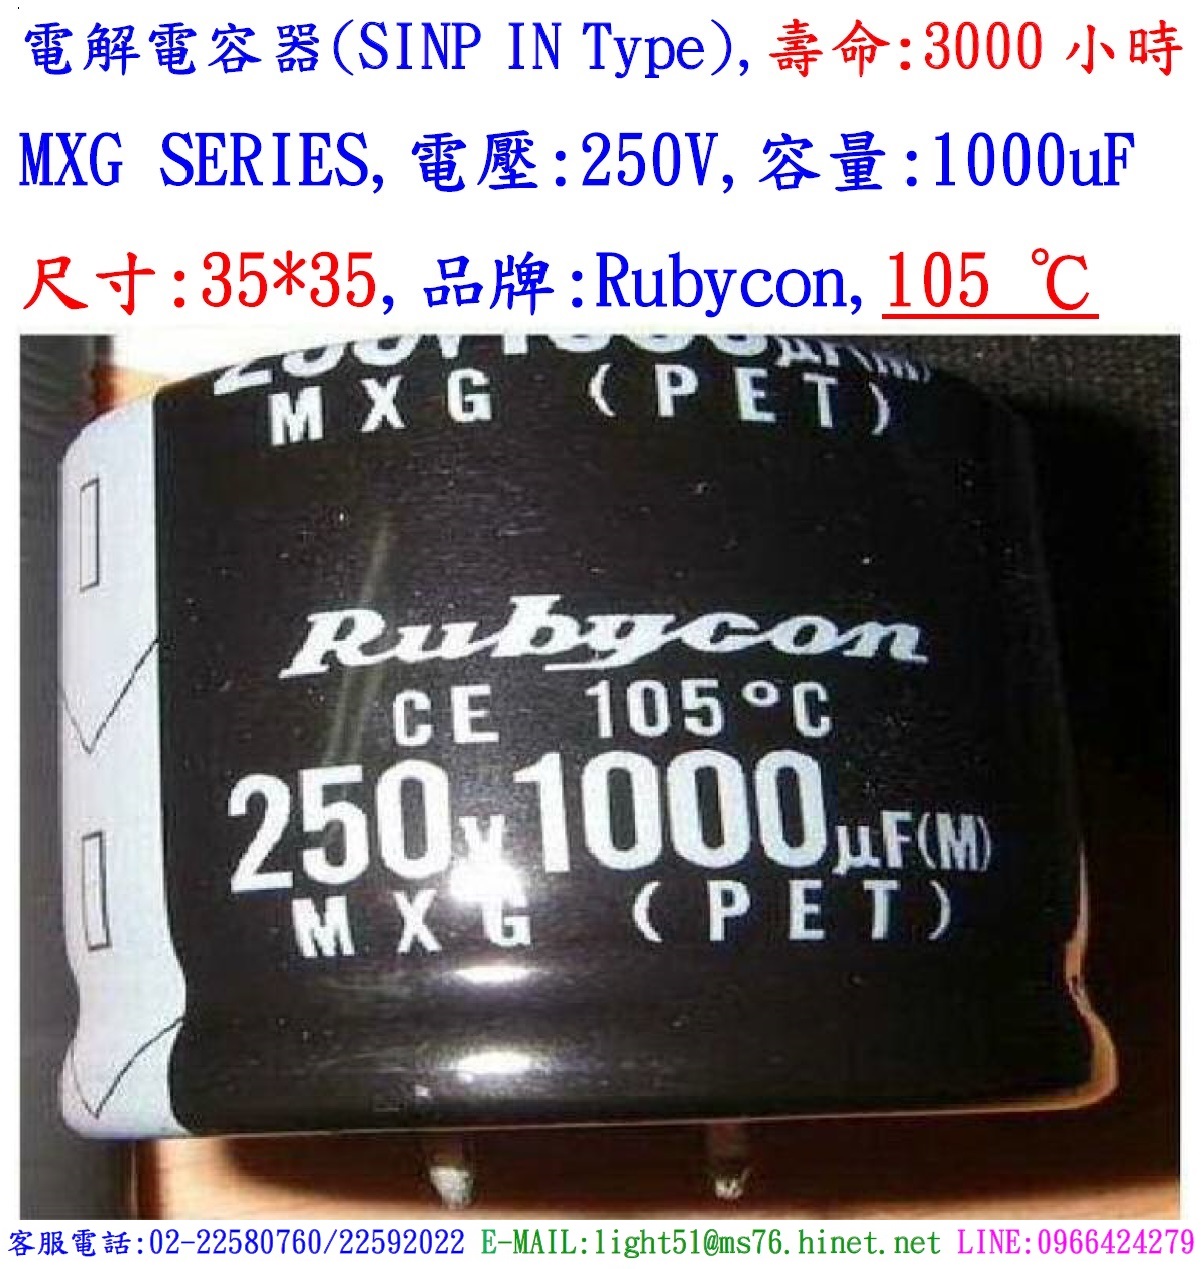 MXG,250V,1000uF,尺寸:35*35,電解電容器,壽命:3000小時,Rubycon